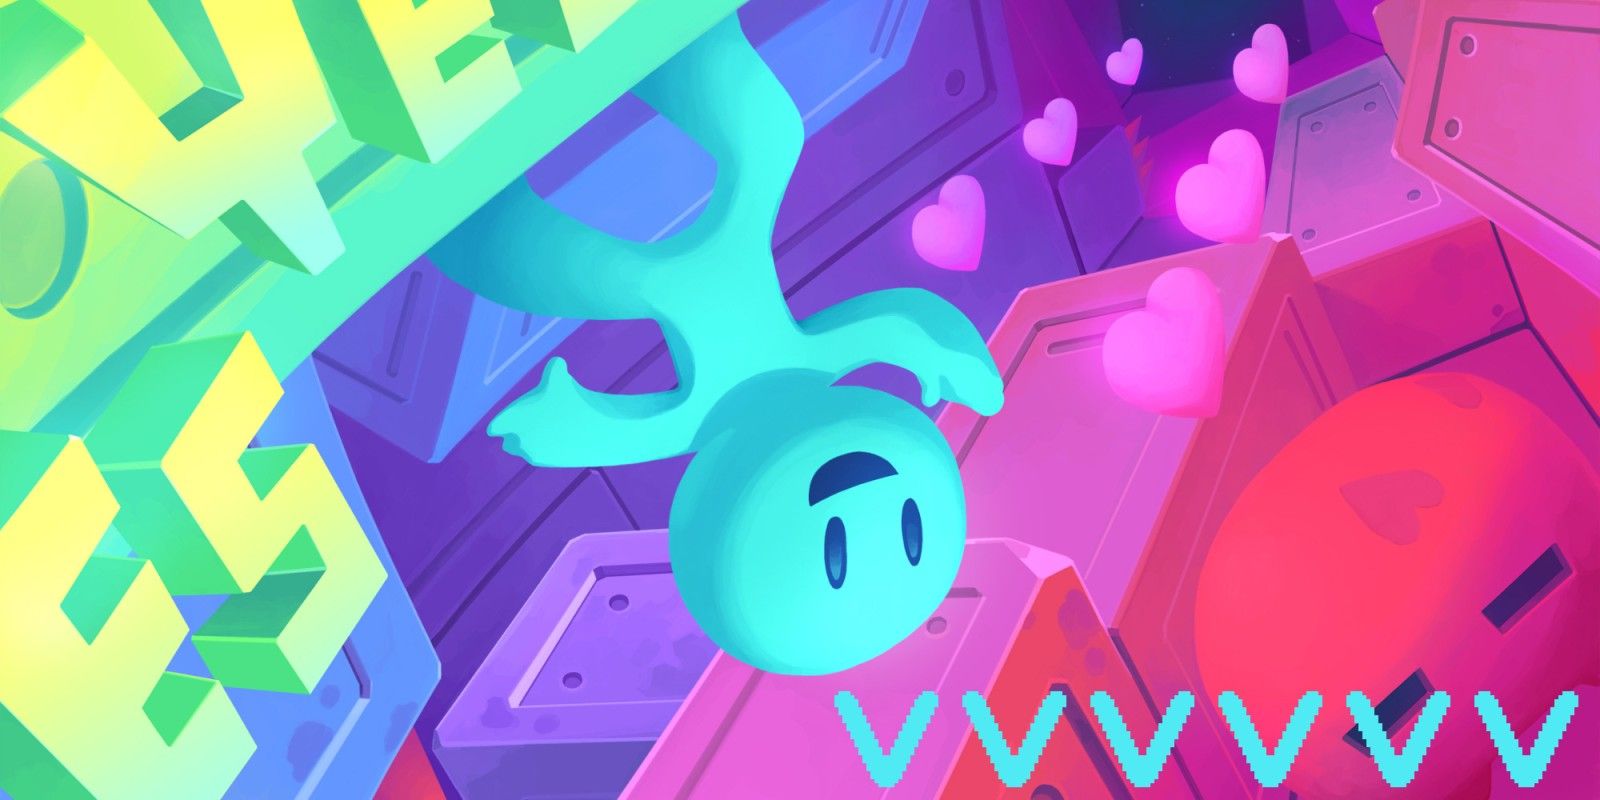 VVVVVV Colorful Promo Image of aqua guy upside down with love hearts next to them